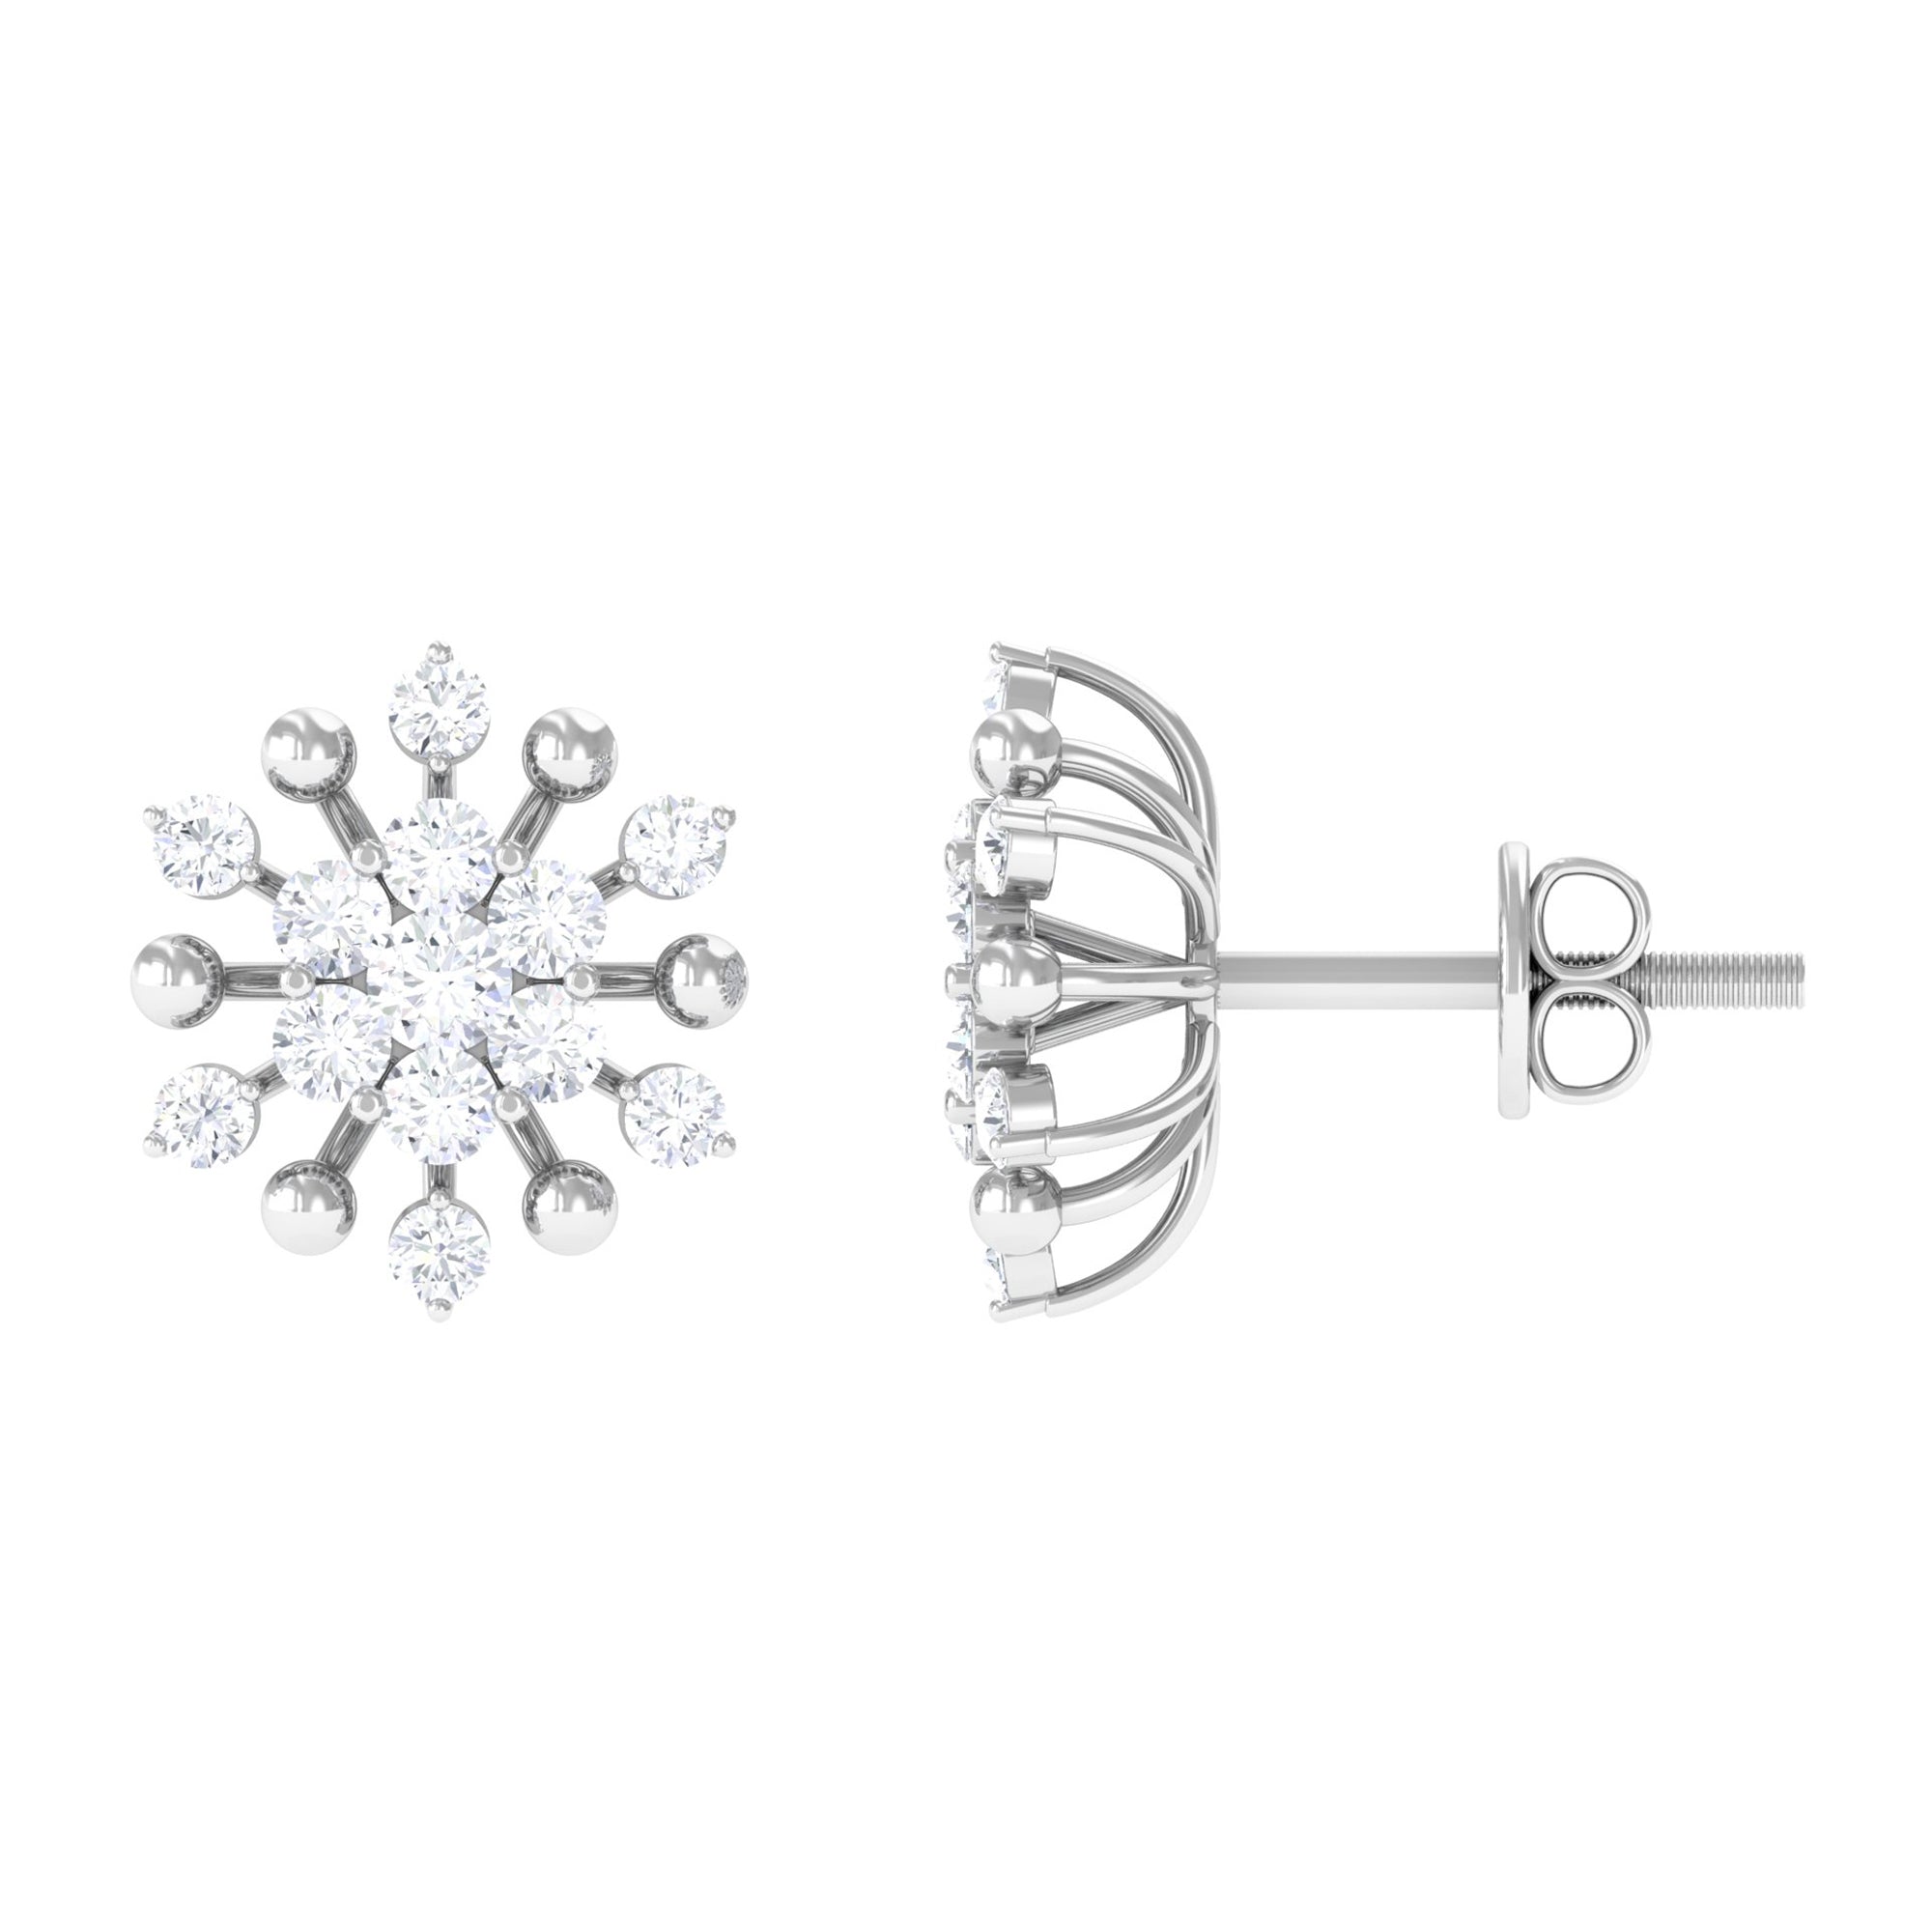 Diamond Cluster Snowflake Stud Earrings Diamond - ( HI-SI ) - Color and Clarity - Rosec Jewels